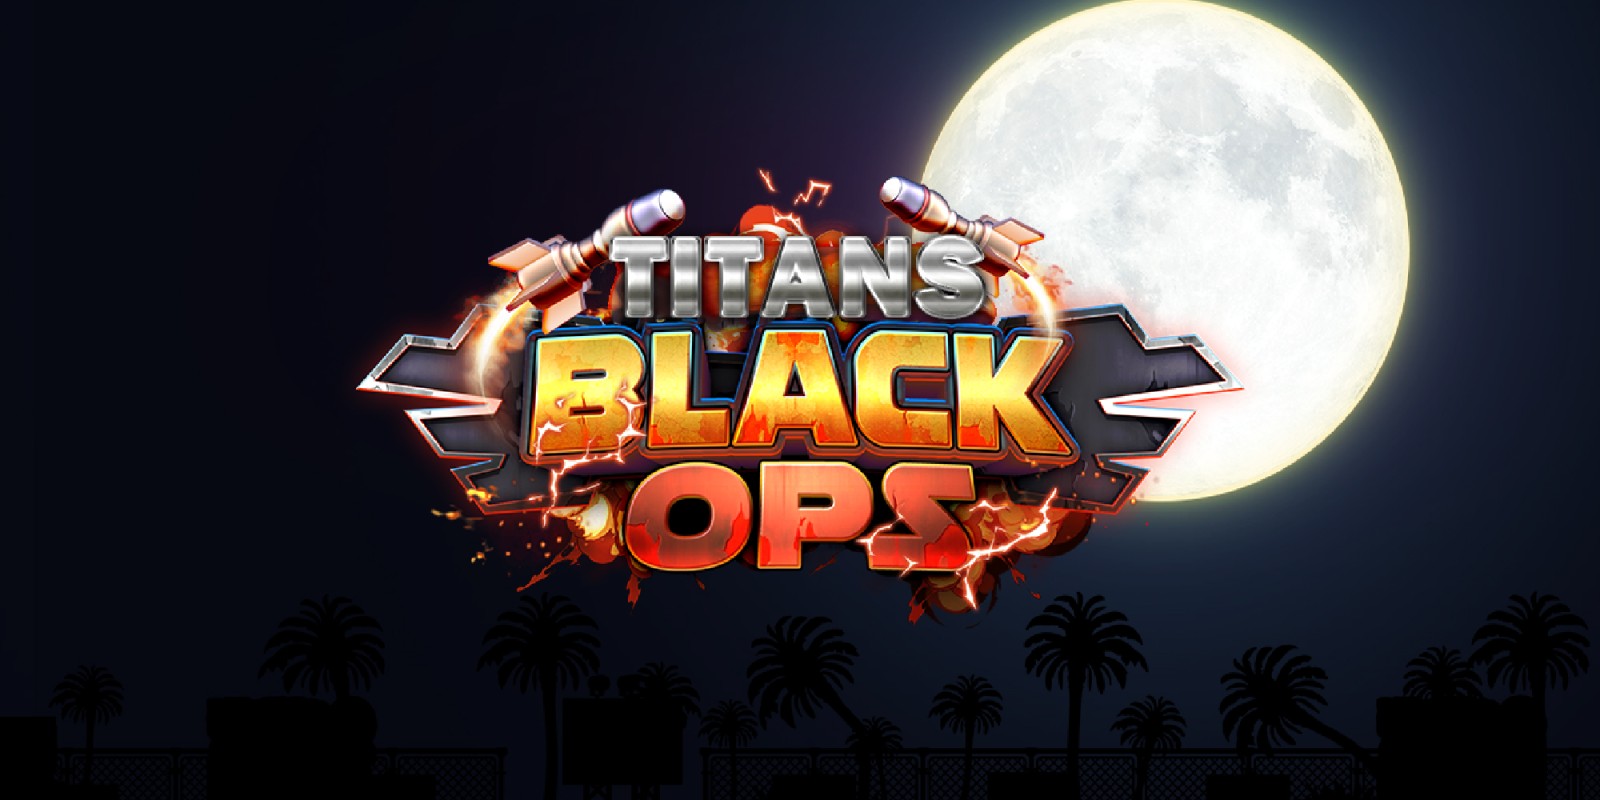 Titans Black Ops